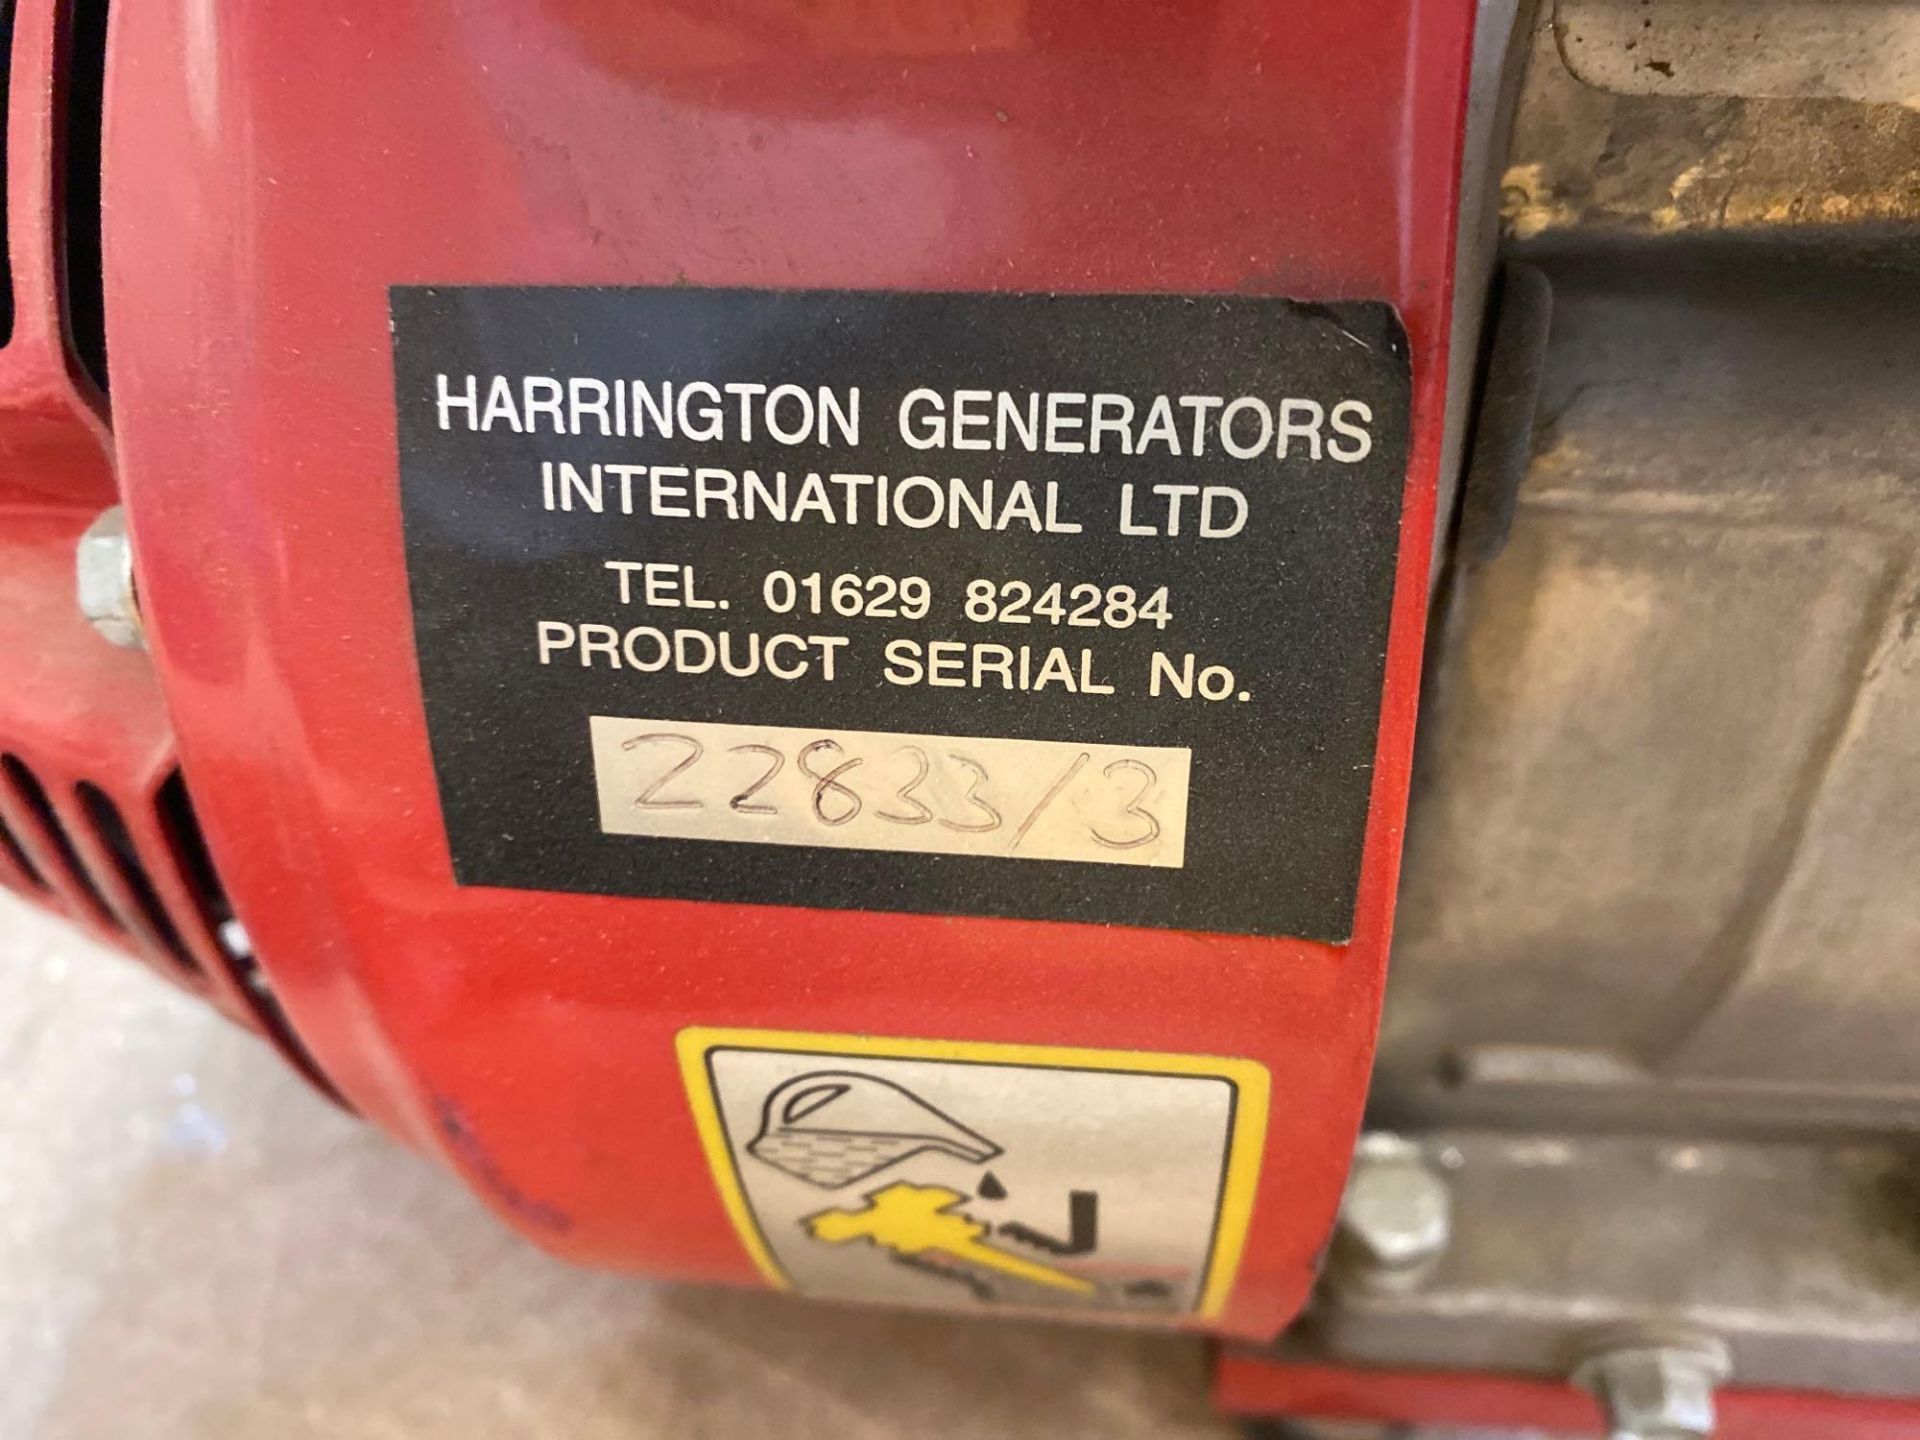 Harrington petrol generator 2.2kw 2.7kva Serial No. 2283313 - Image 4 of 6